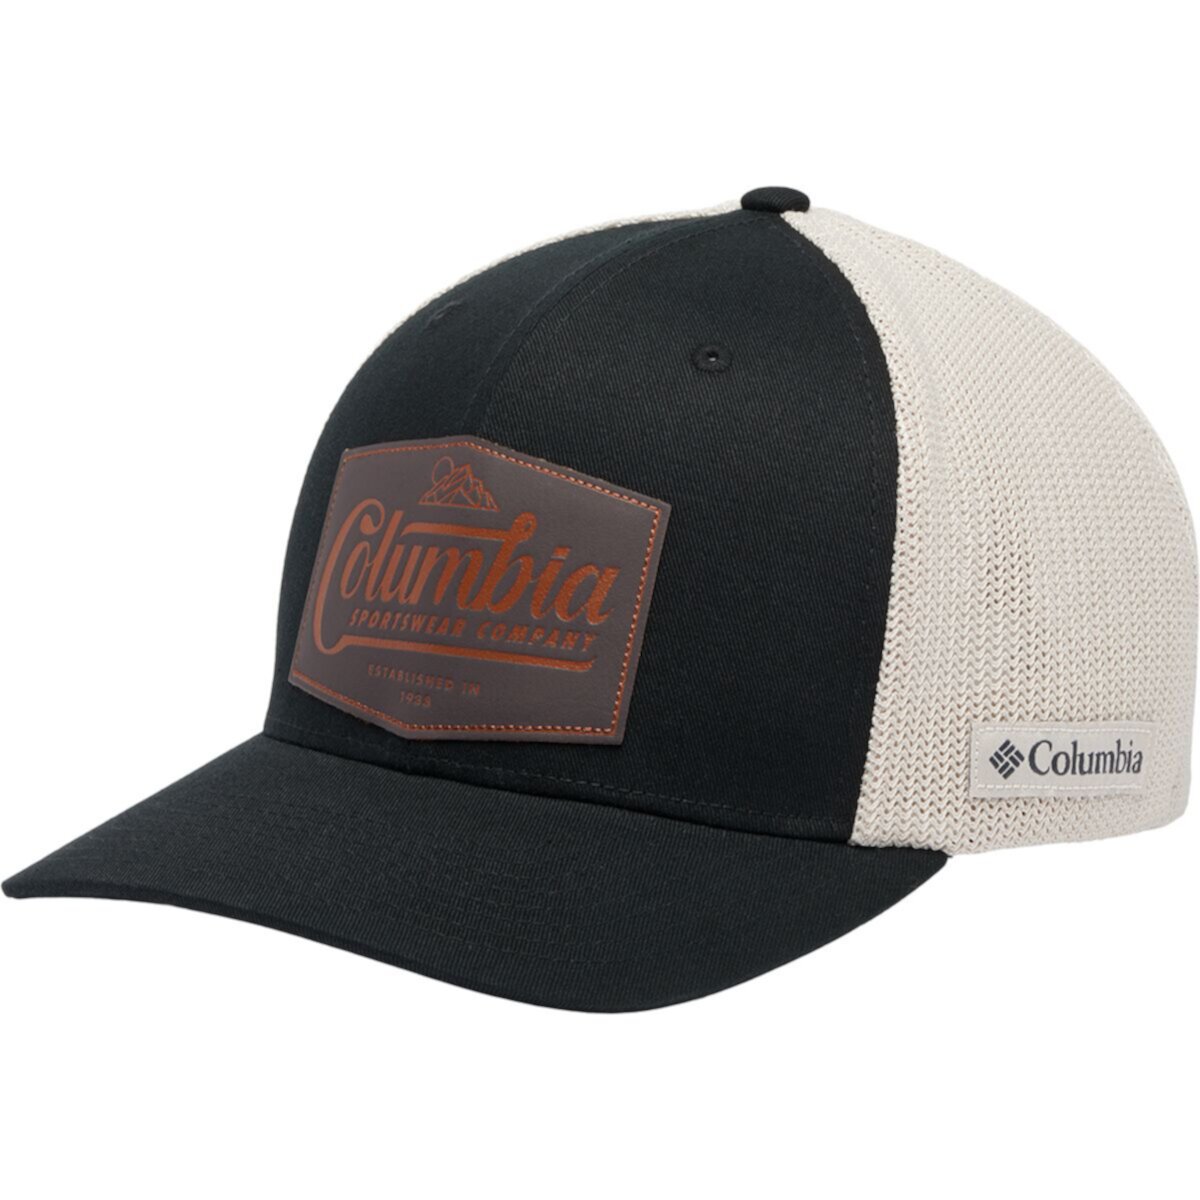 Прочная уличная сетчатая шляпа Columbia